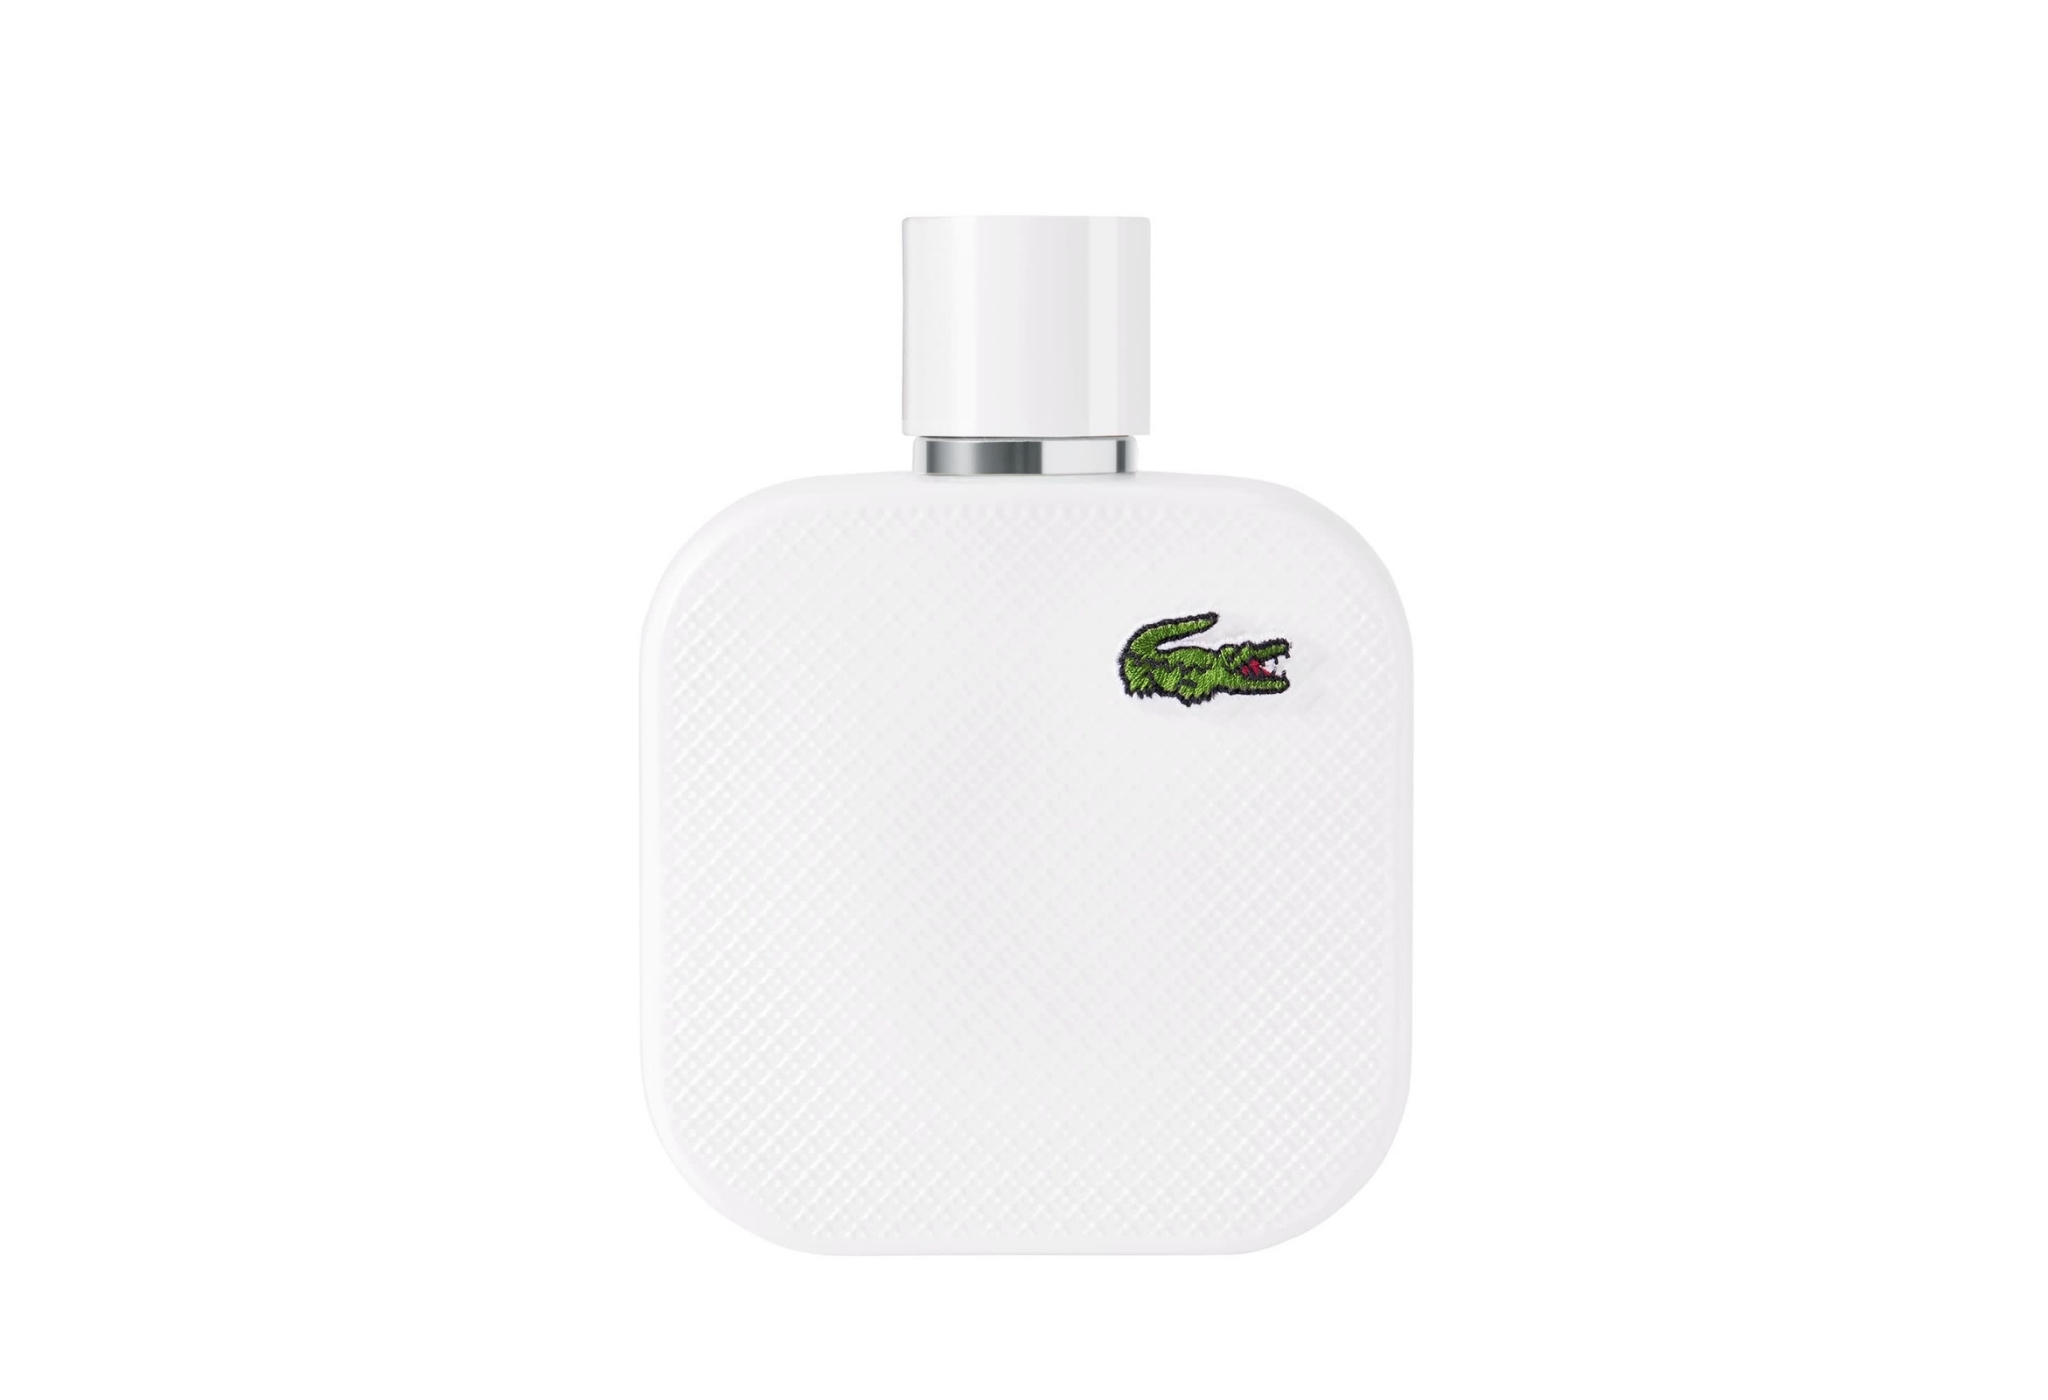 lacoste L1212 white - best summer fragrances for men